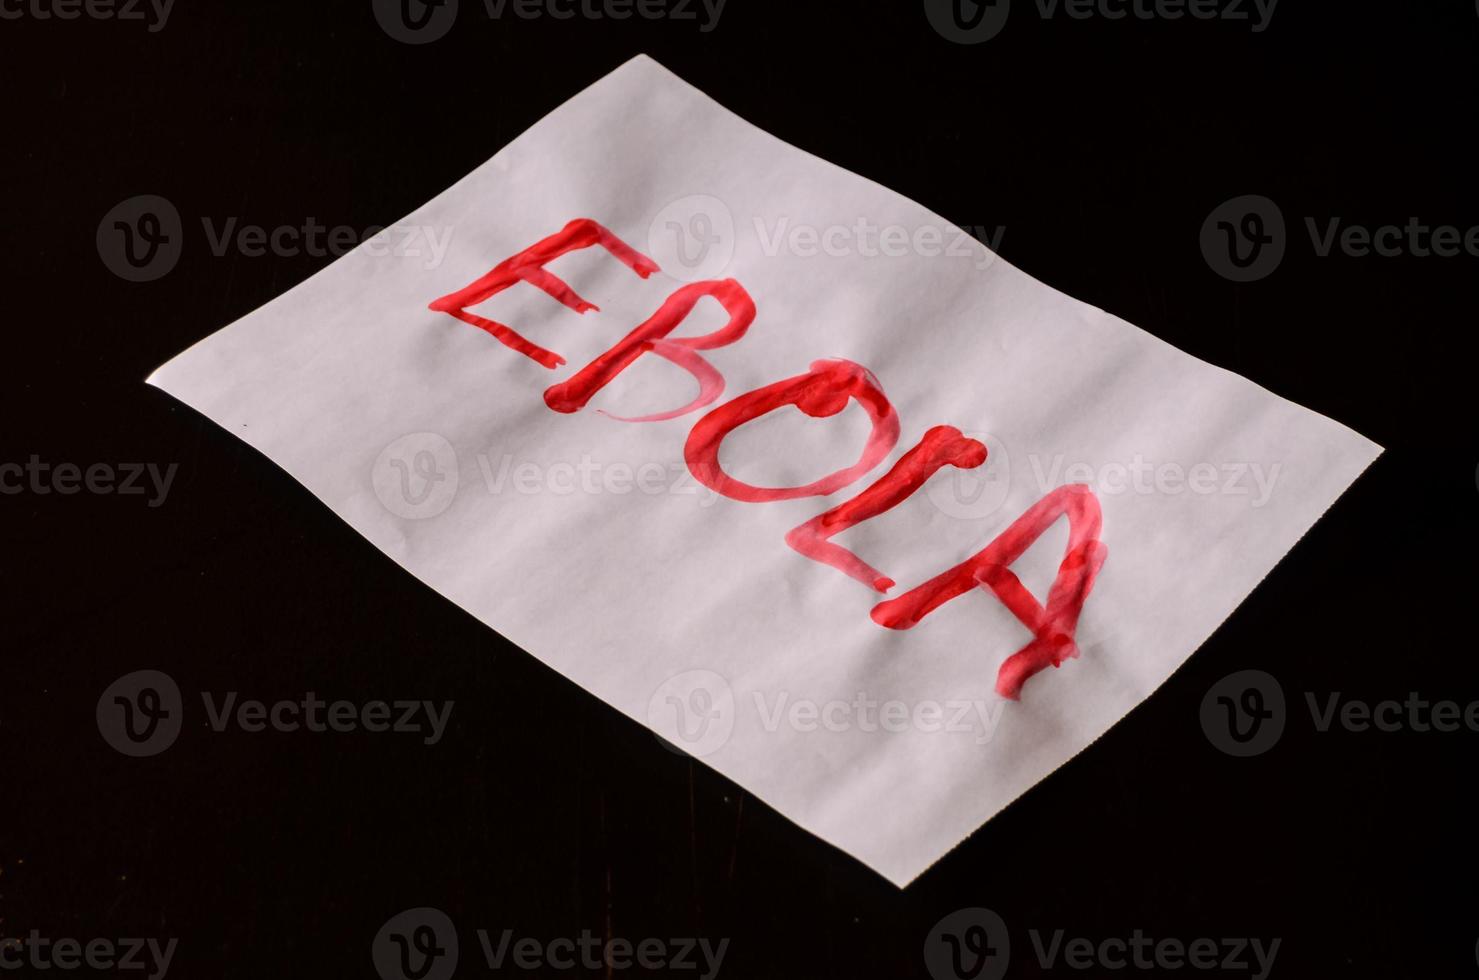 Ebola written on paper photo